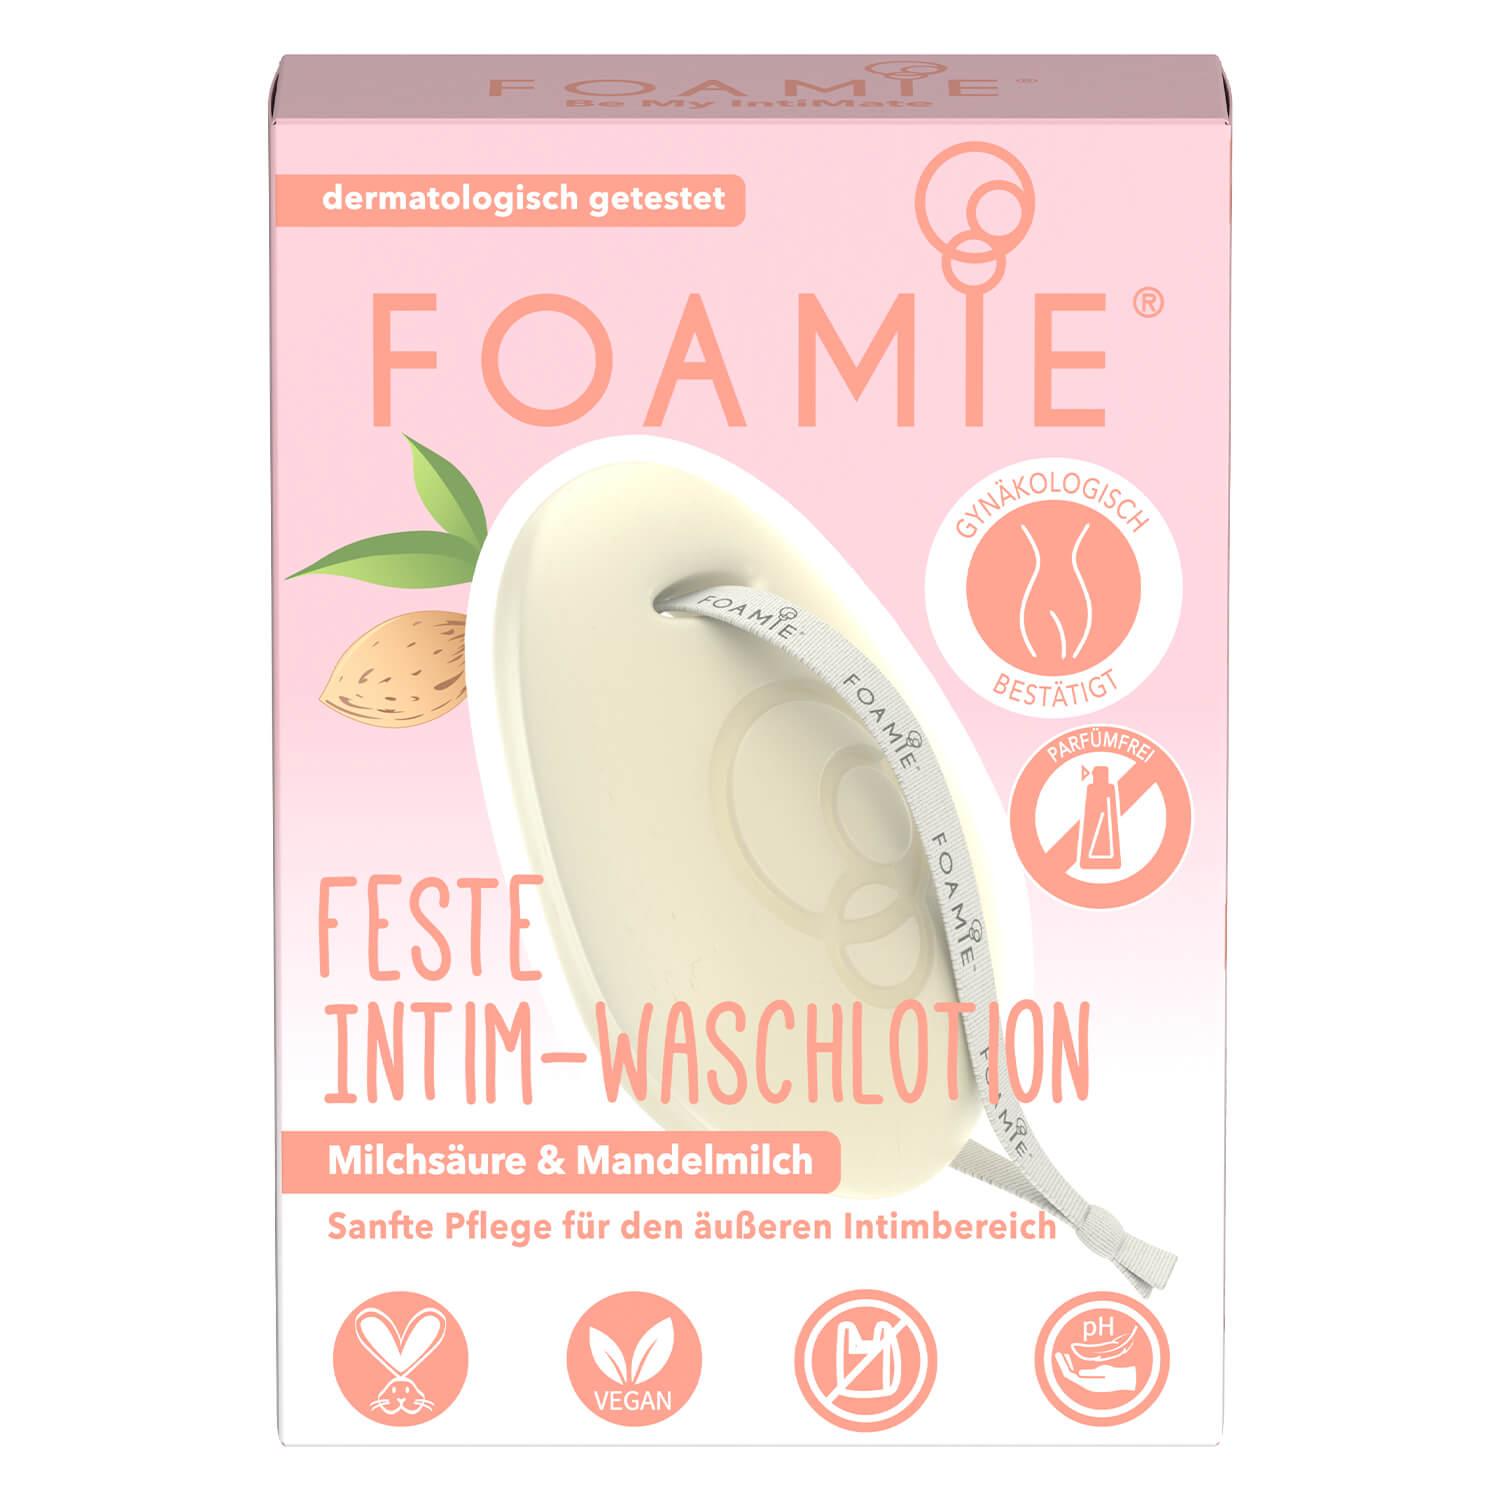 Foamie - Feste Intim-Waschlotion